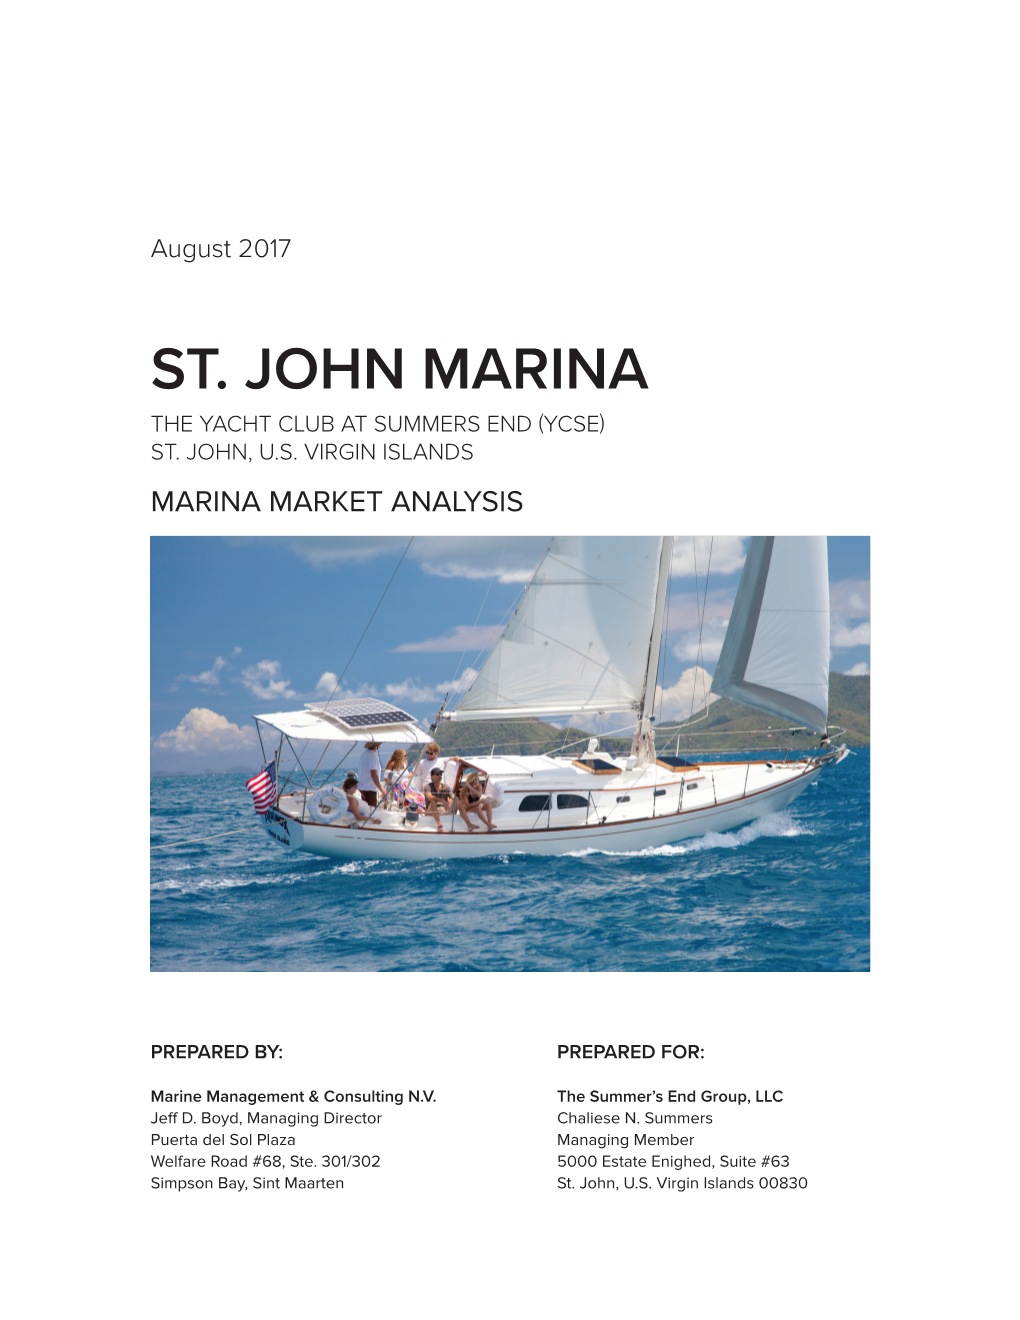 St. John Marina the Yacht Club at Summers End (Ycse) St